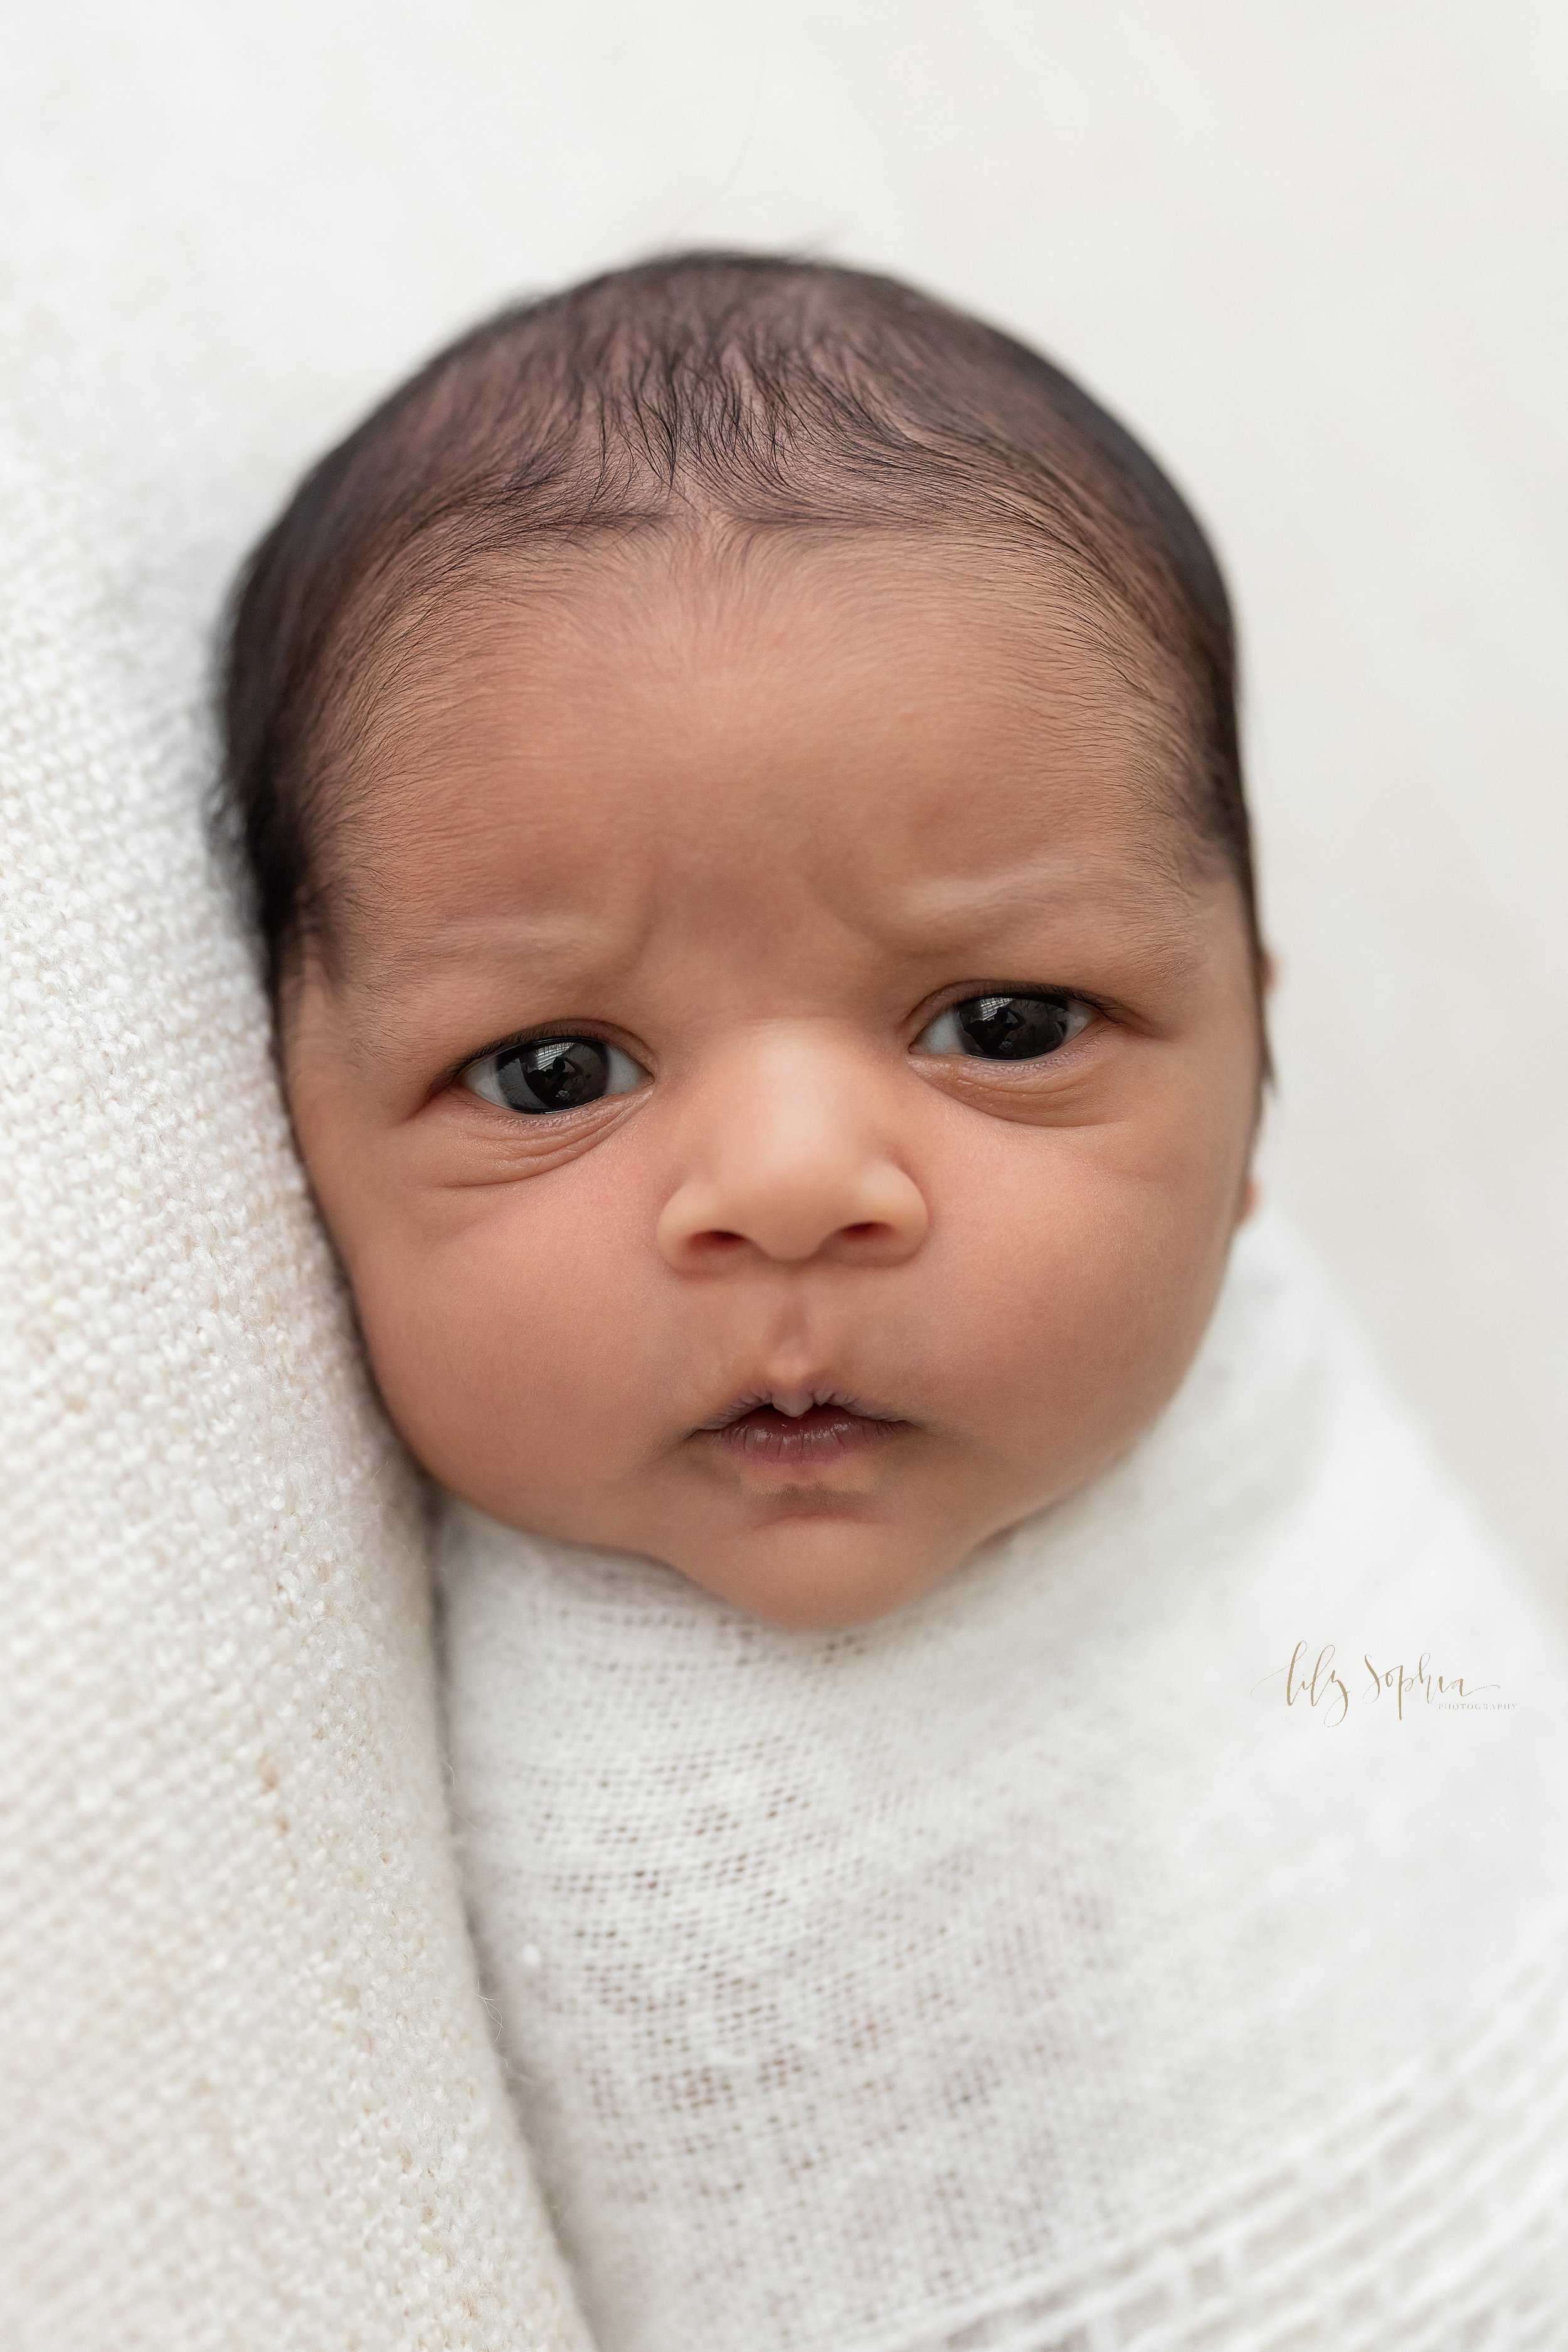 intown-atlanta-grant-park-decatur-oakhurst-indian-family-baby-boy-studio-newborn-photoshoot_2309.jpg